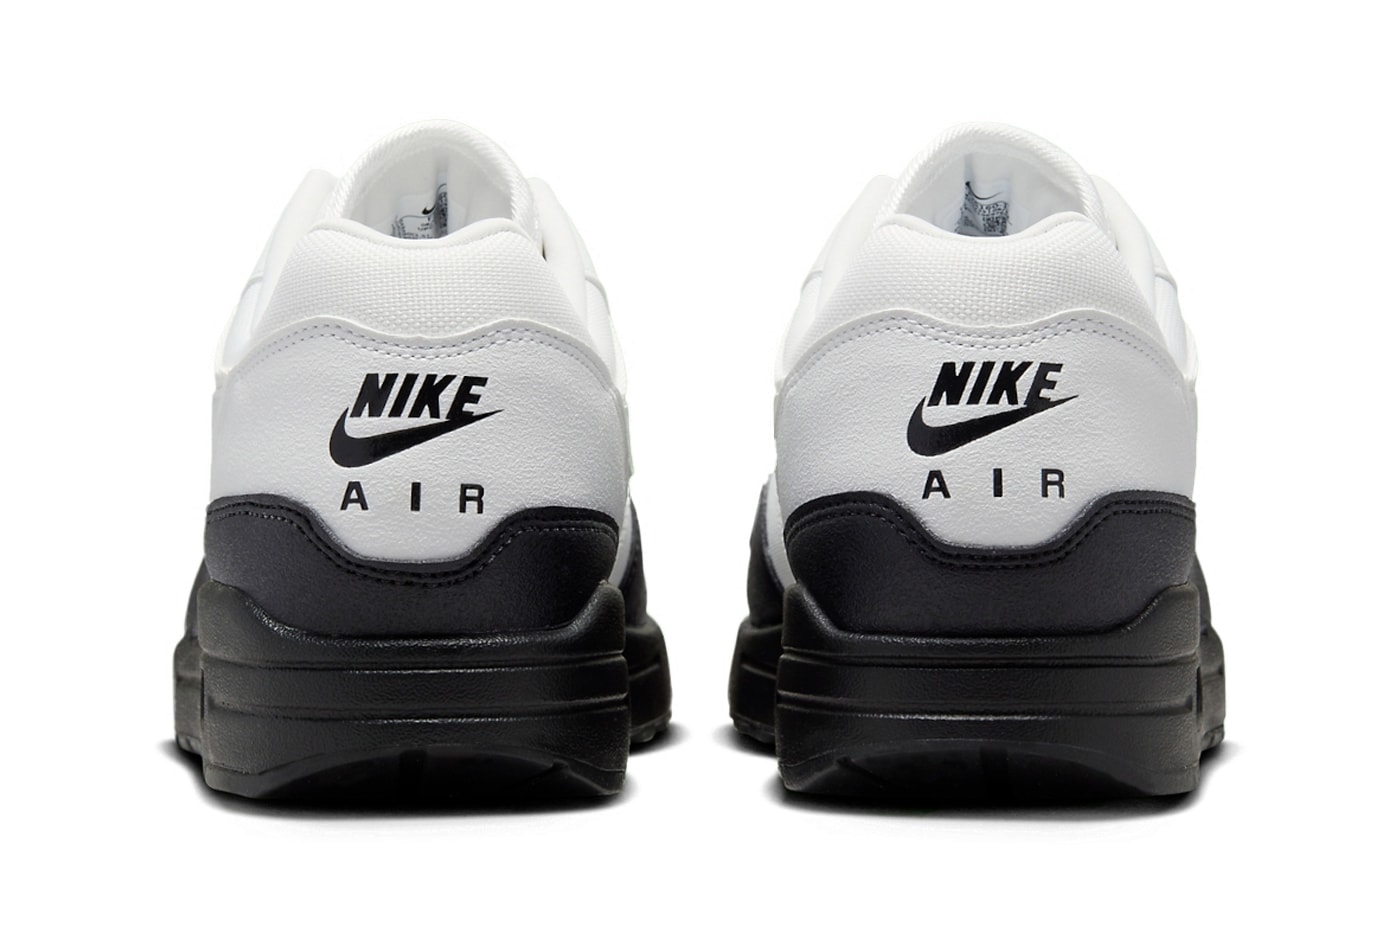 Nike Air Max 1 Black/White Release Info